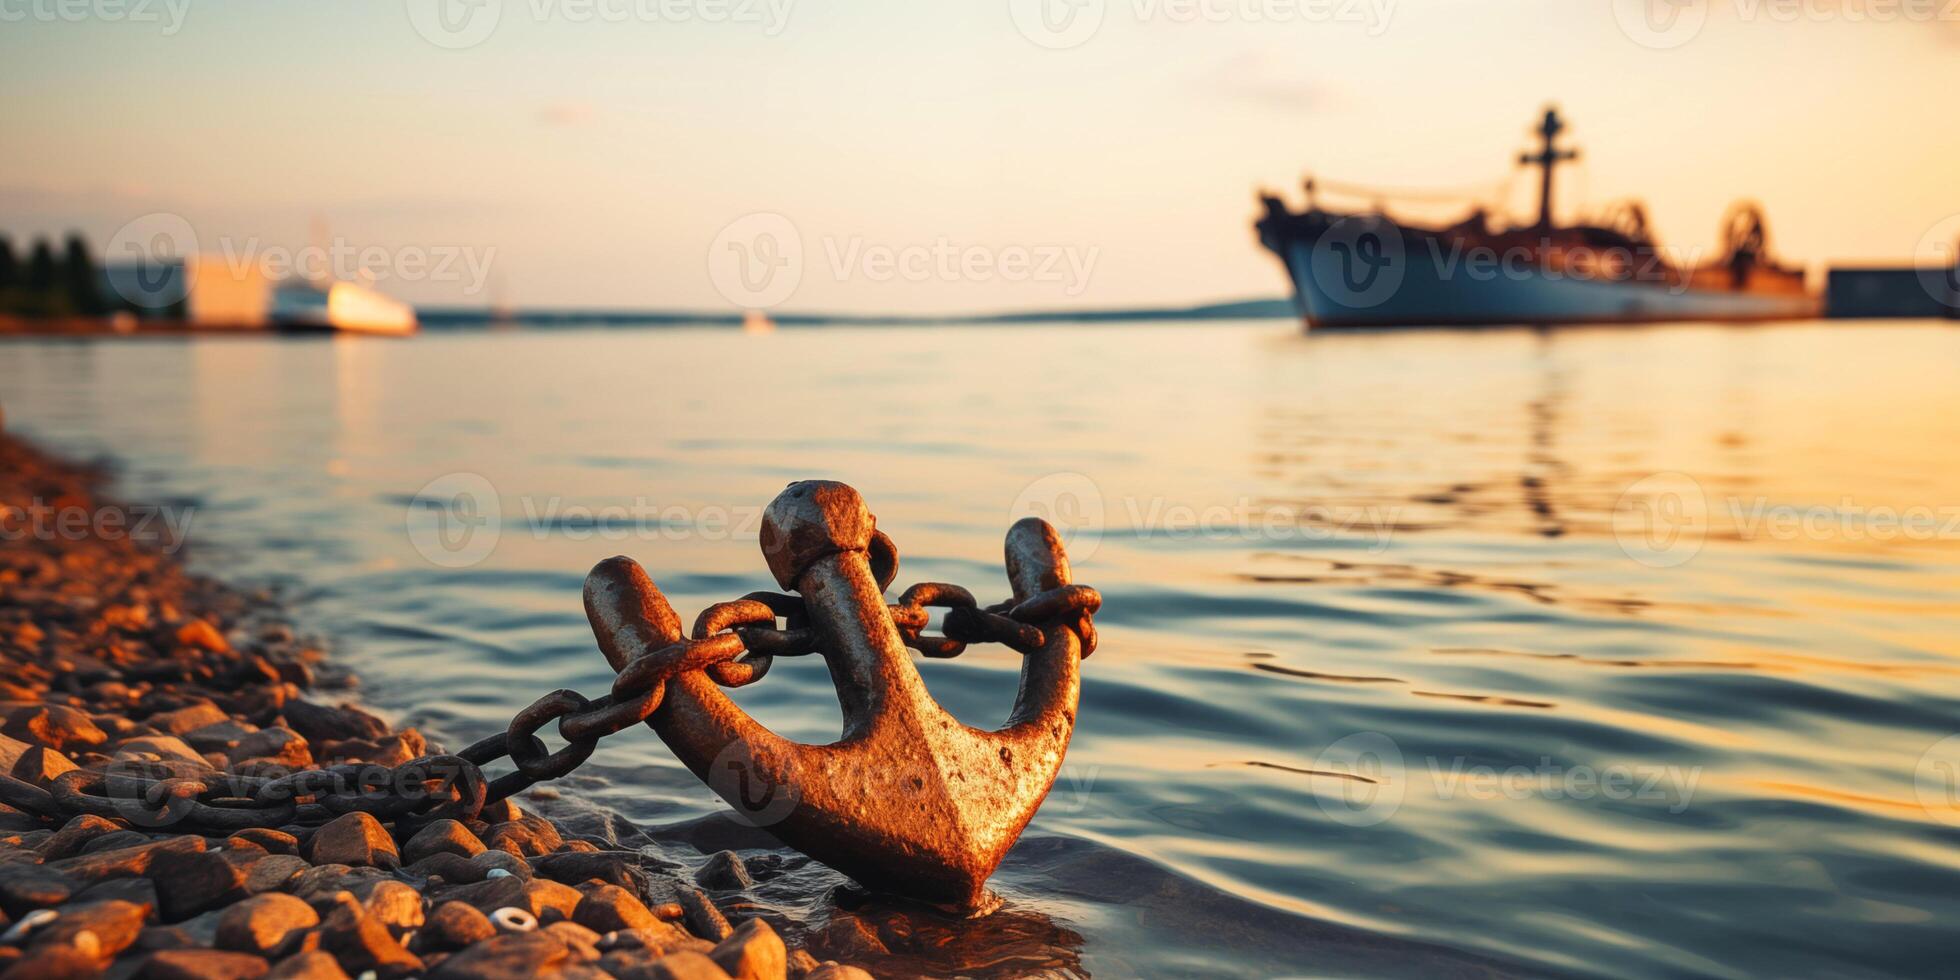 AI generated Ship Anchor on Sunset Background in Coastal Harbor photo